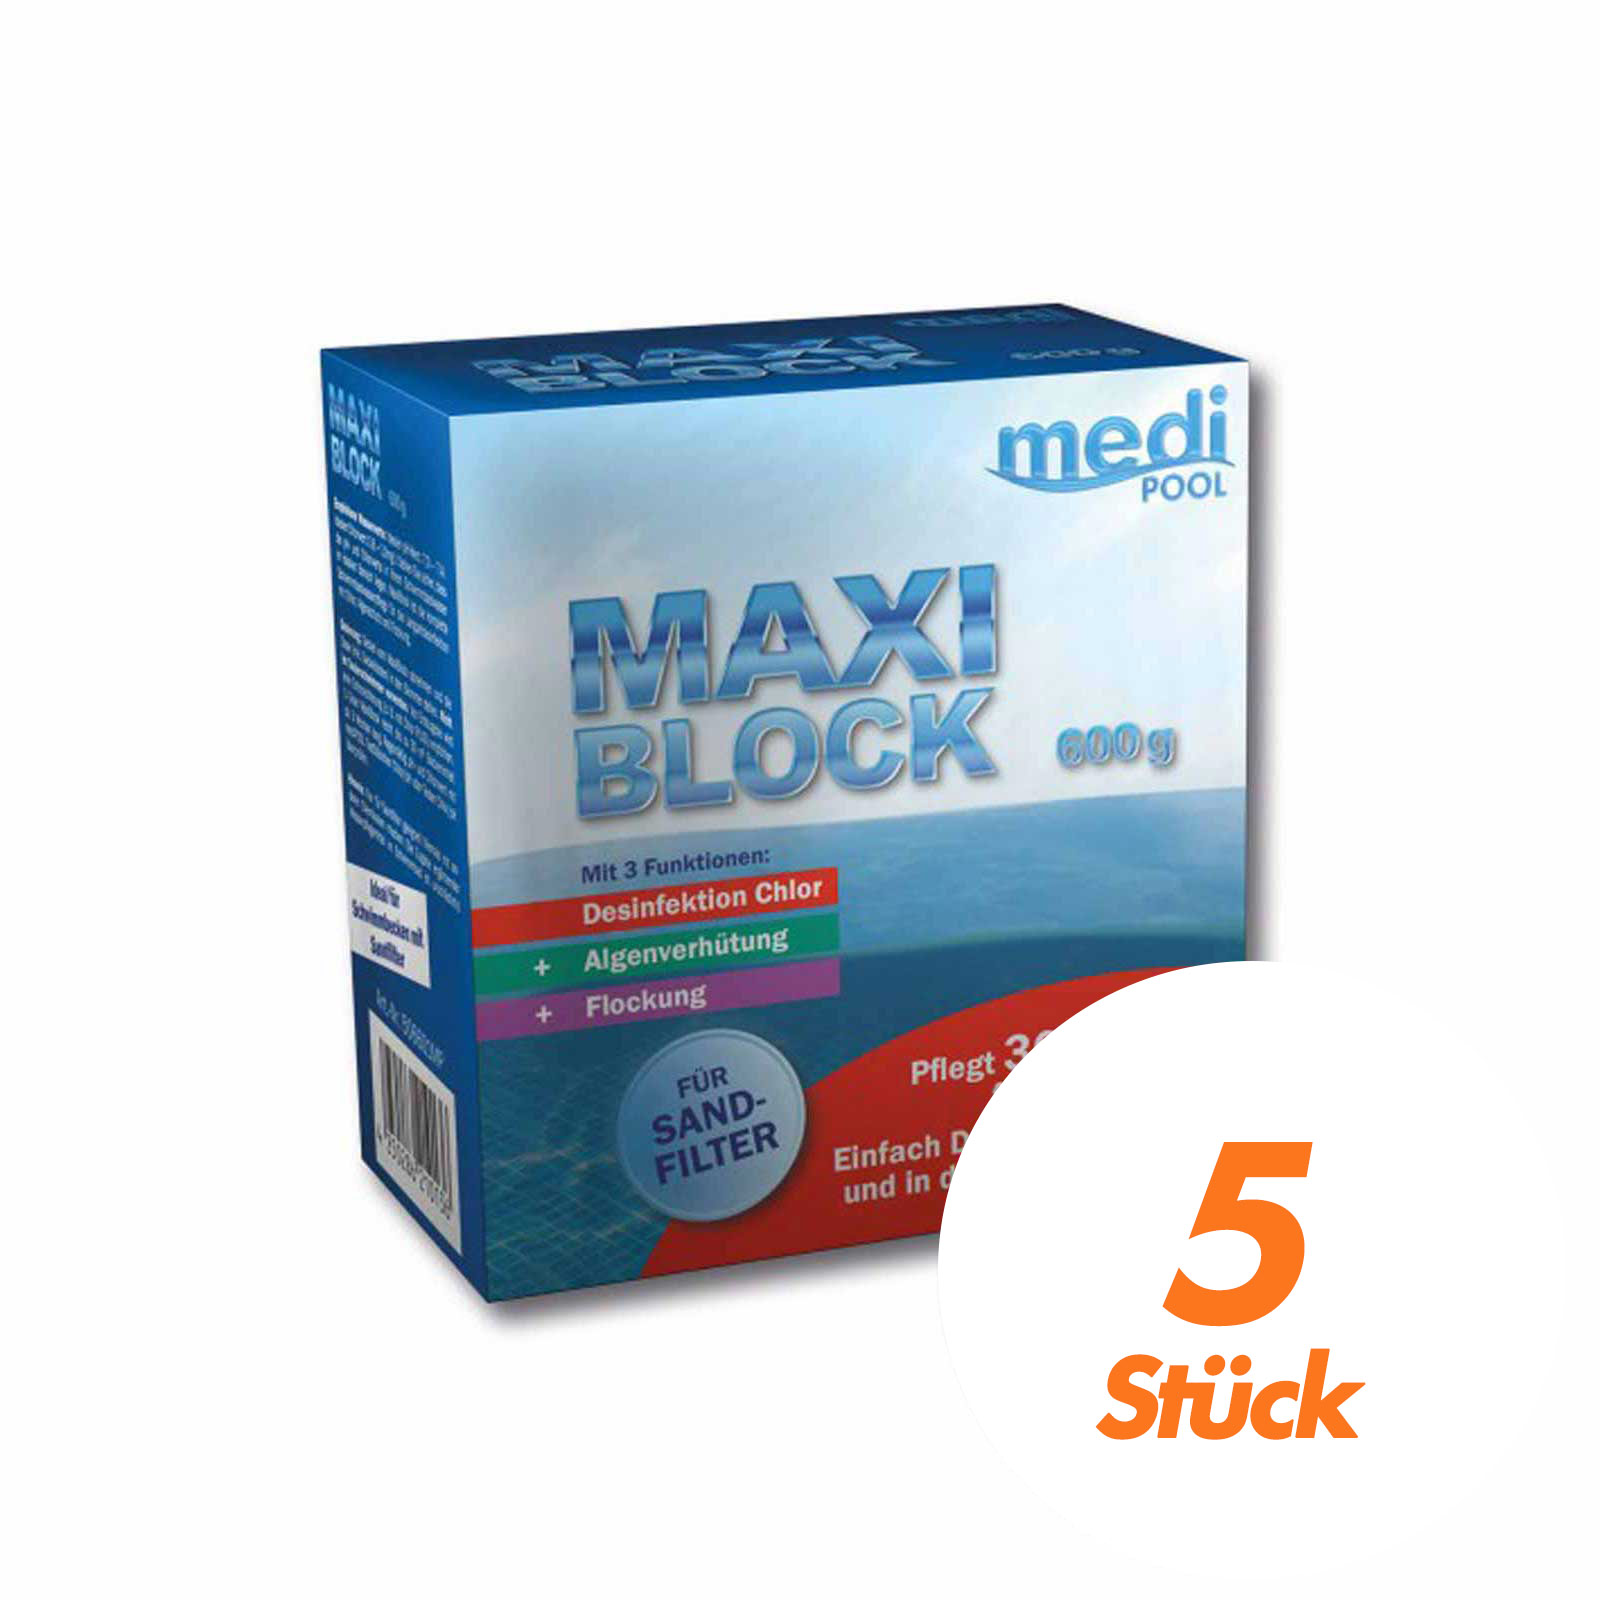 mediPOOL MaxiBlock 5x 600g Multifunktionsblock Chlorblock Langzeitdesinfektion von mediPOOL